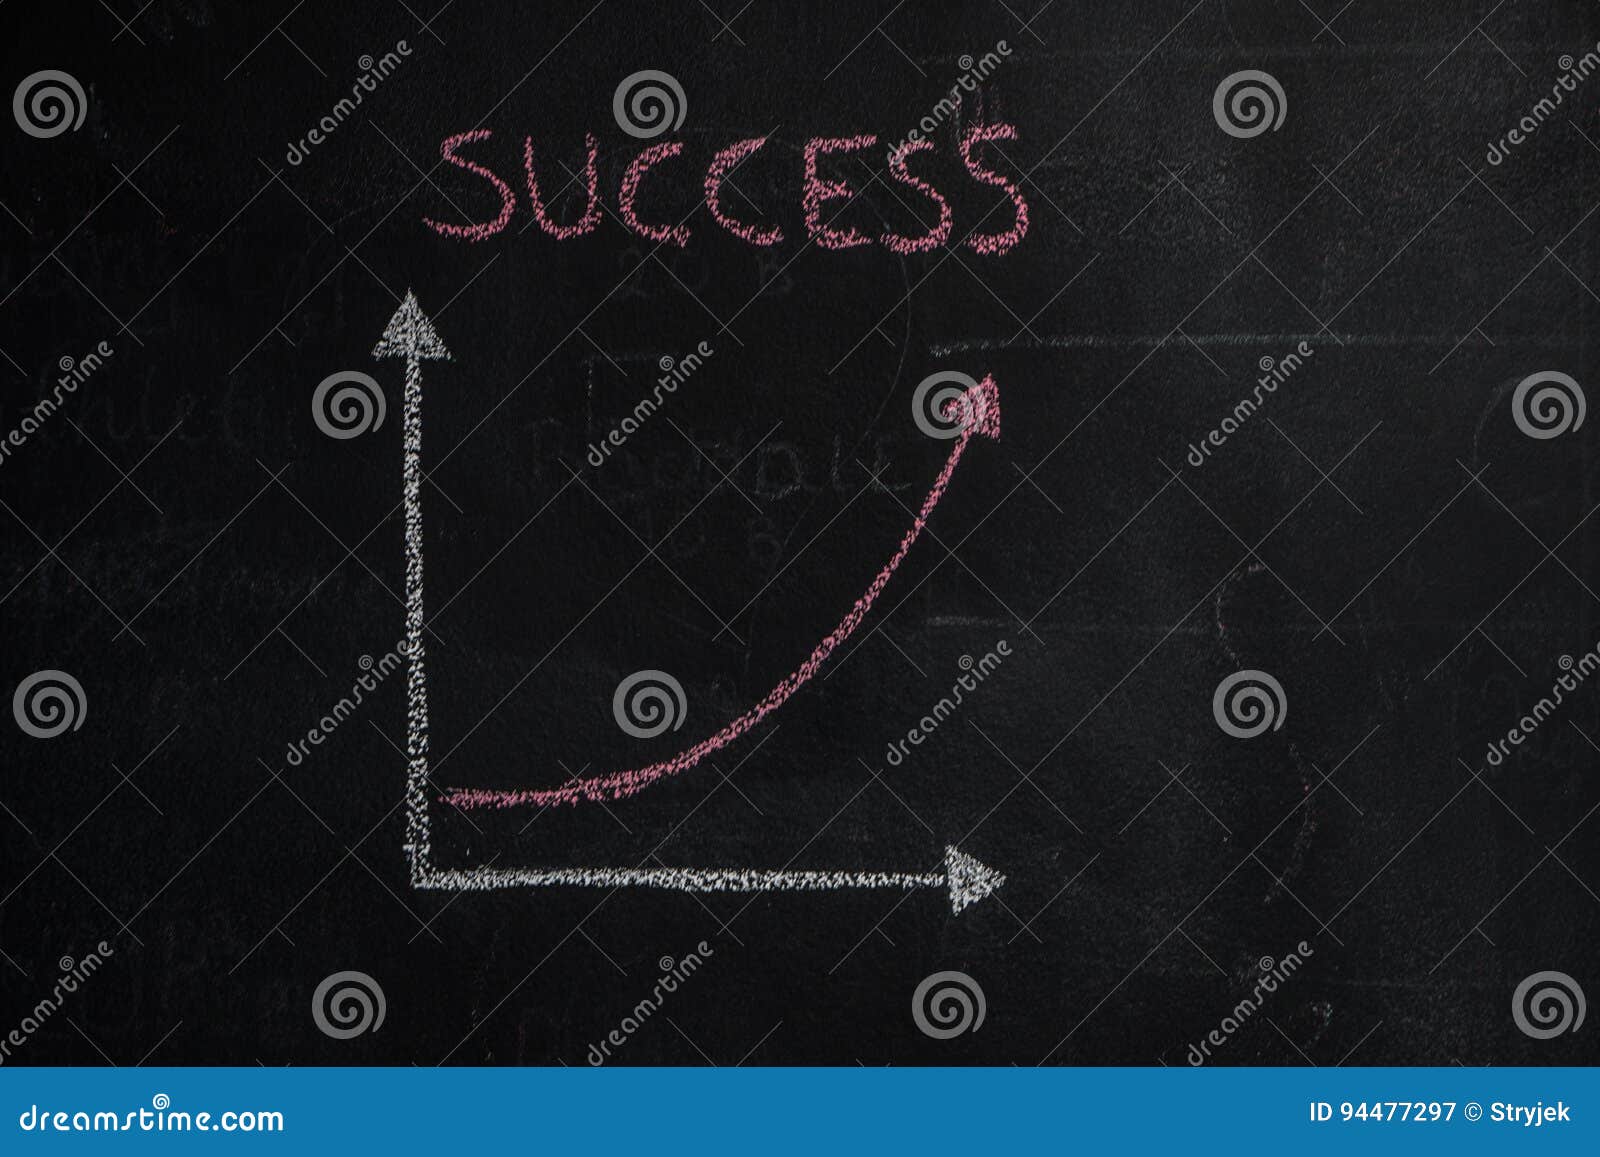 chalkboard with finance business graph showing upward trend